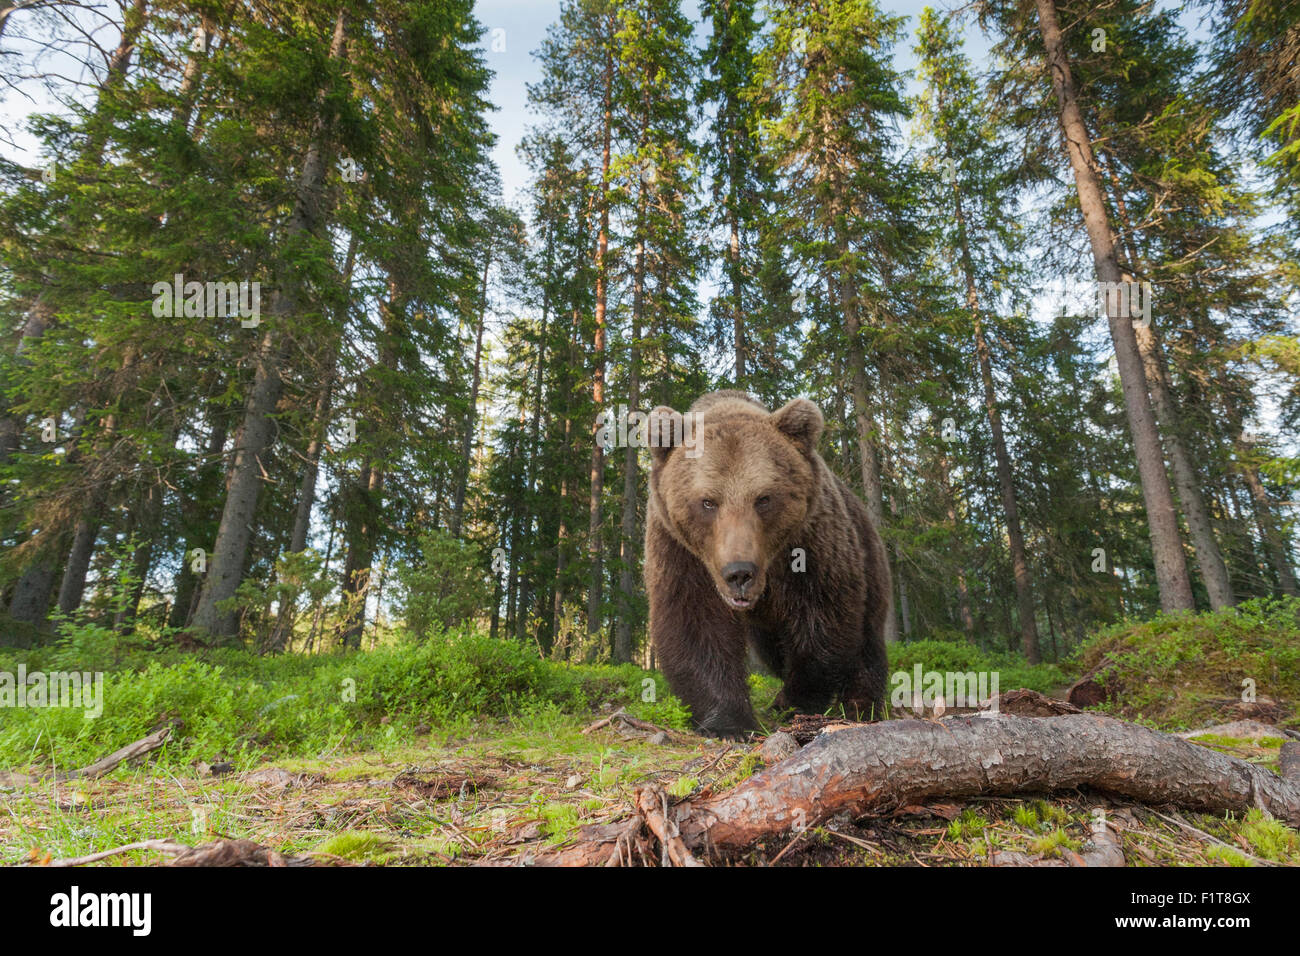 Unione di orso bruno Ursus arctos arctos. Foto Stock